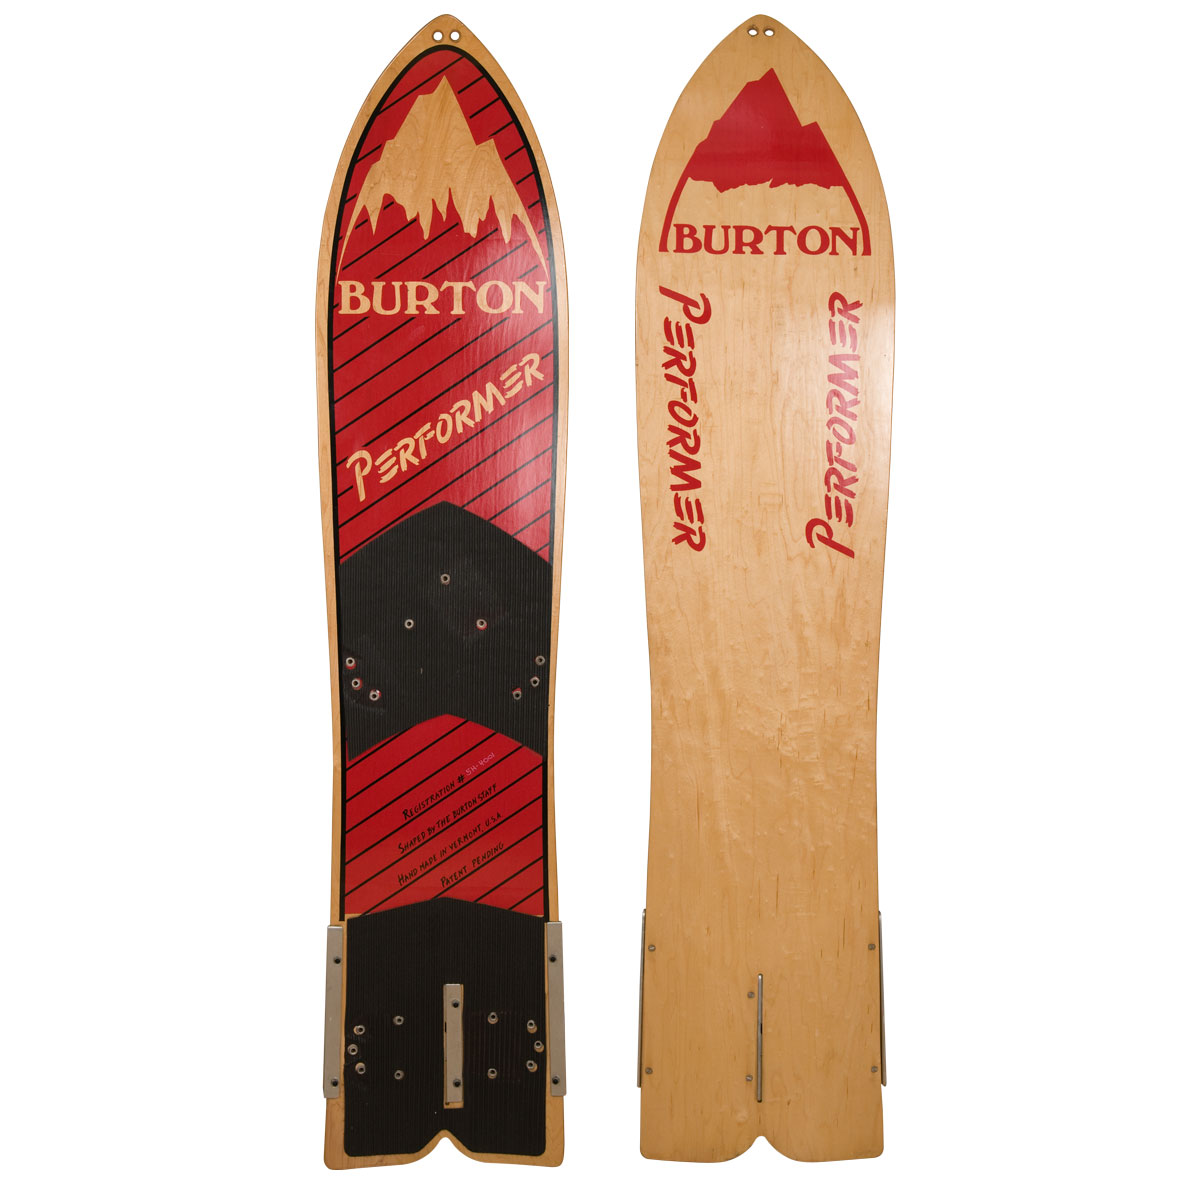 Burton Performer Vintage Snowboard